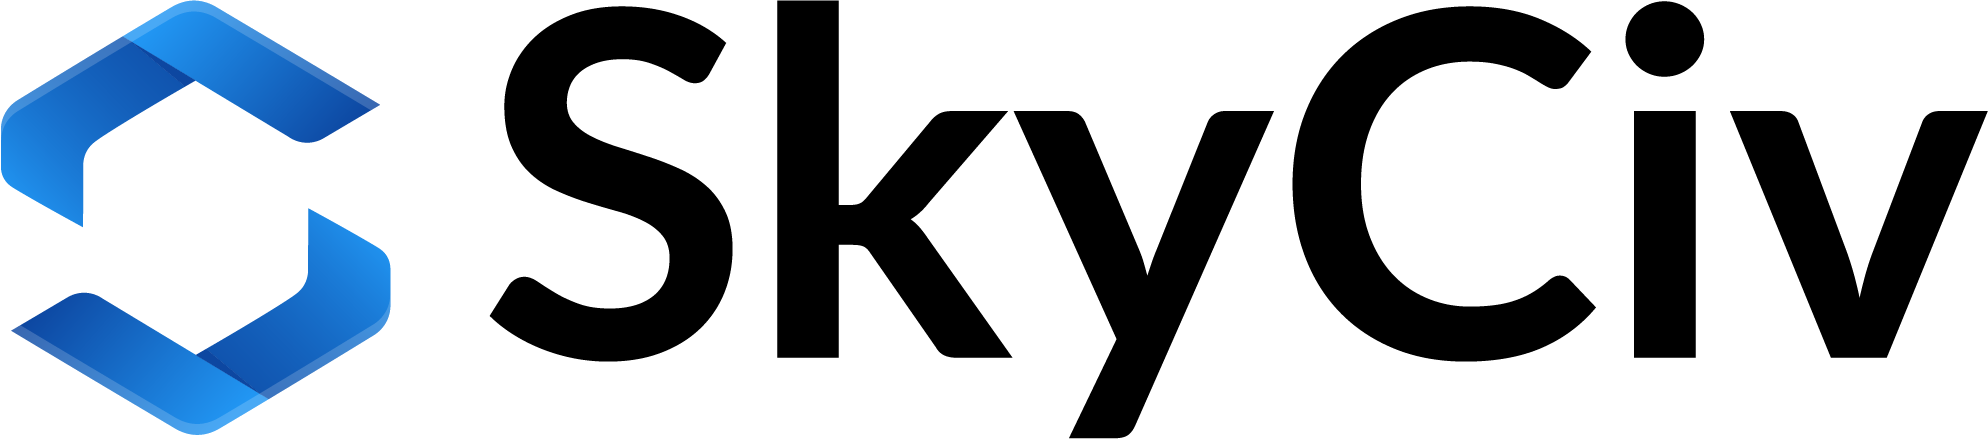 Logotipo do software de análise estrutural da nuvem SkyCiv